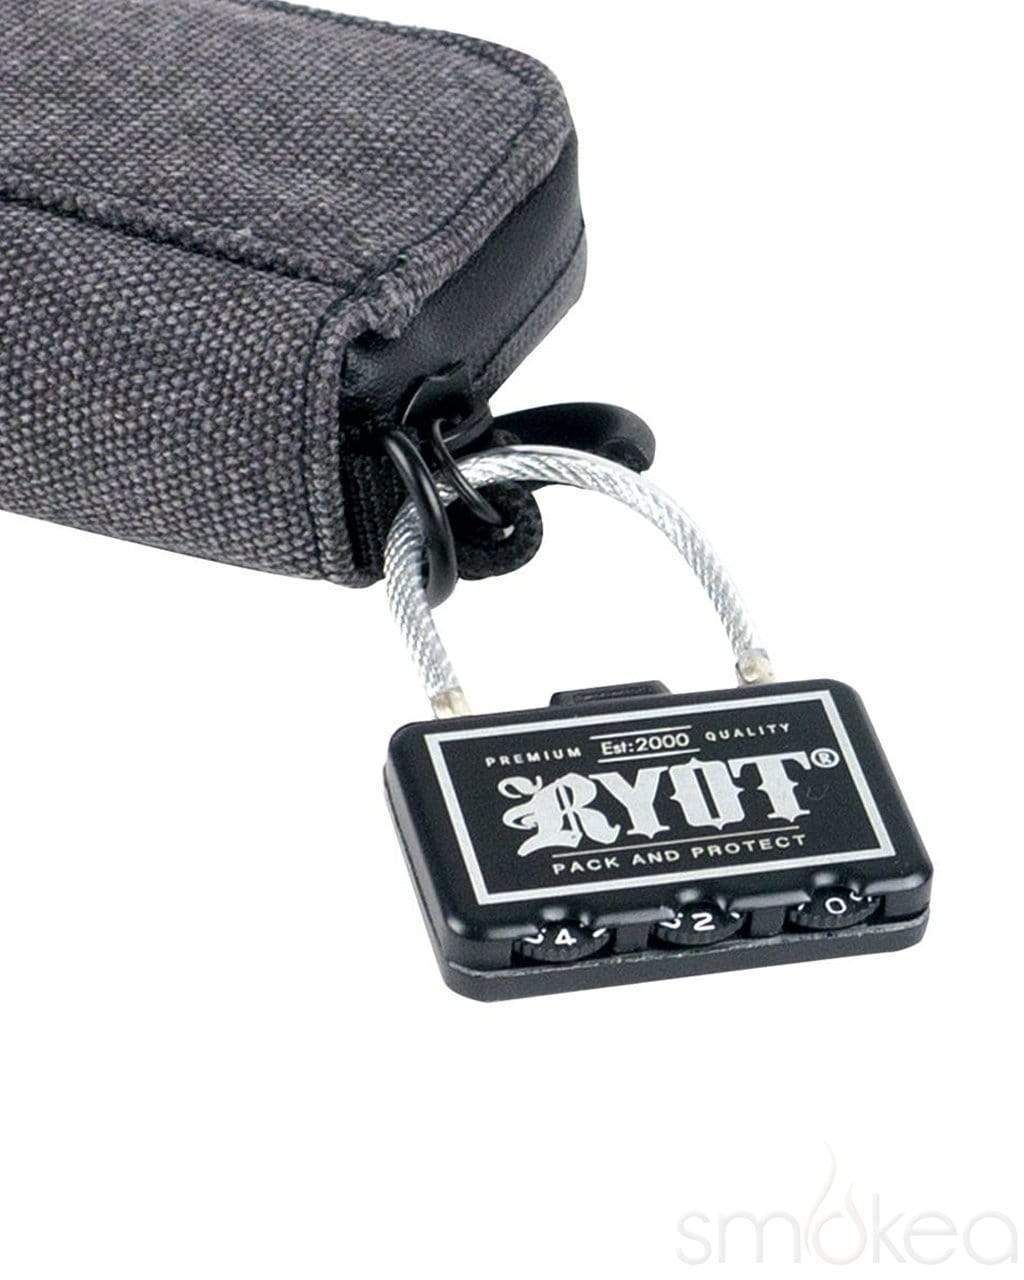 RYOT SmellSafe Krypto-Kit Loaded Case Pipe